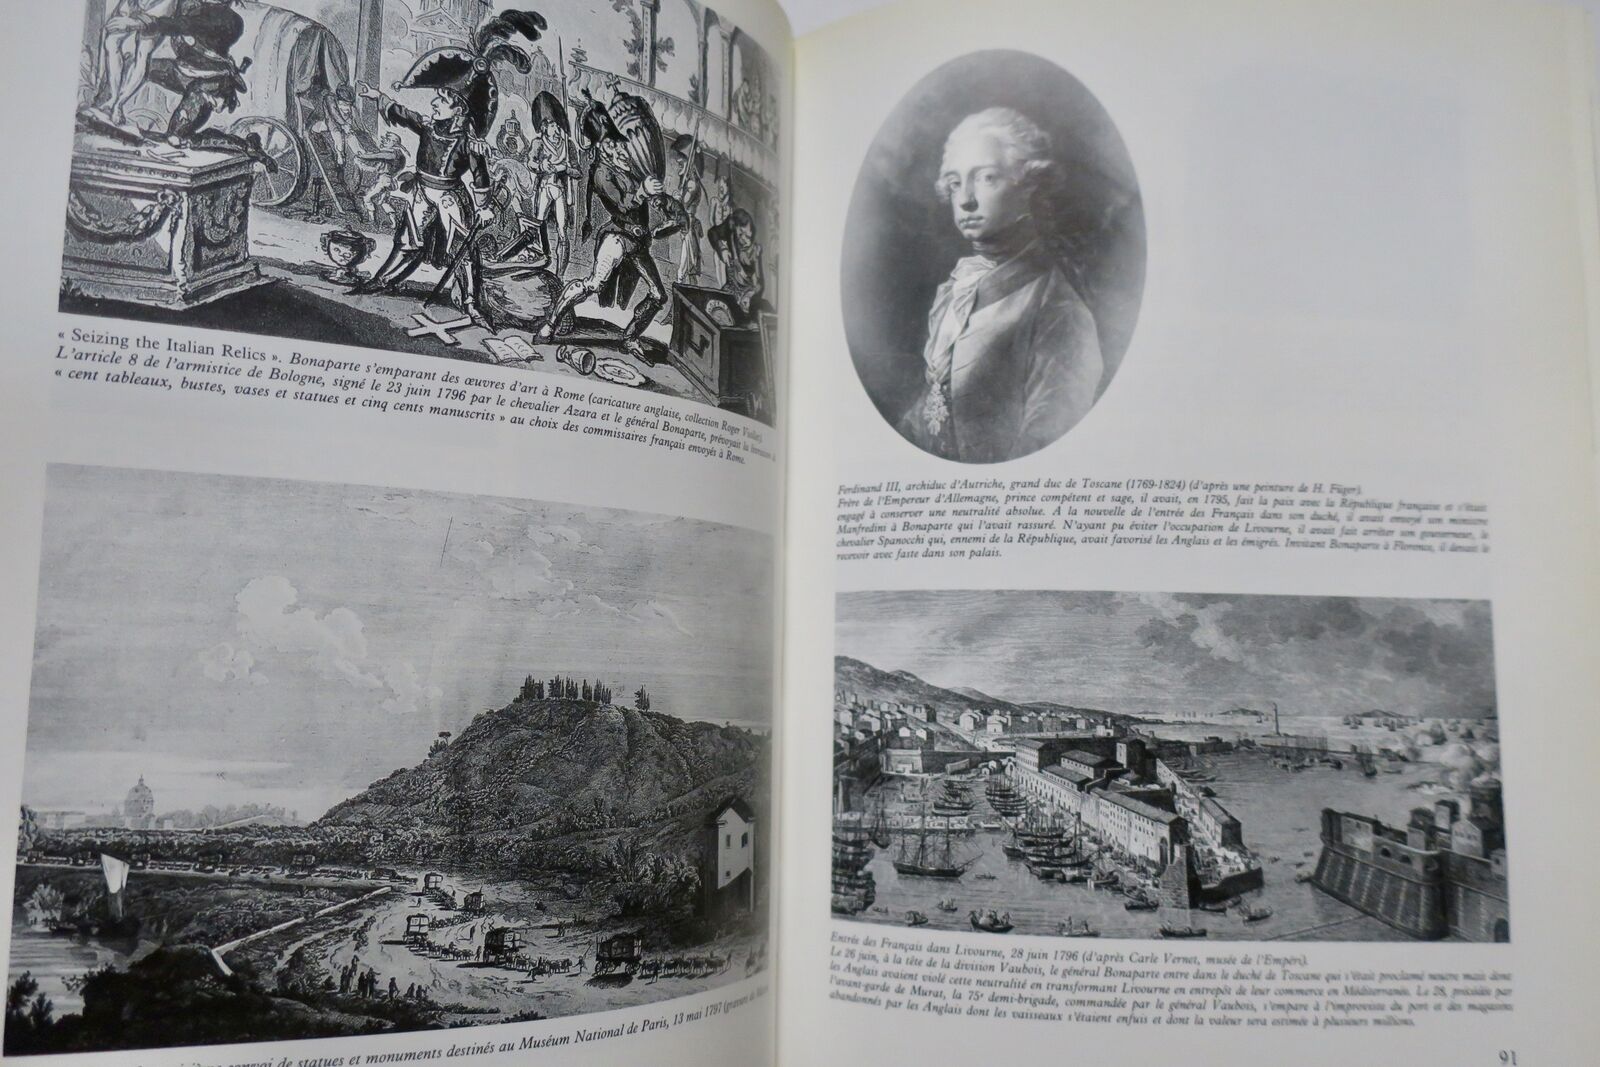 HNB 015 NAPOLEON BONAPARTE CAMPAGNE DE ITALIE 1796-1797 COBRA EDITIONS 